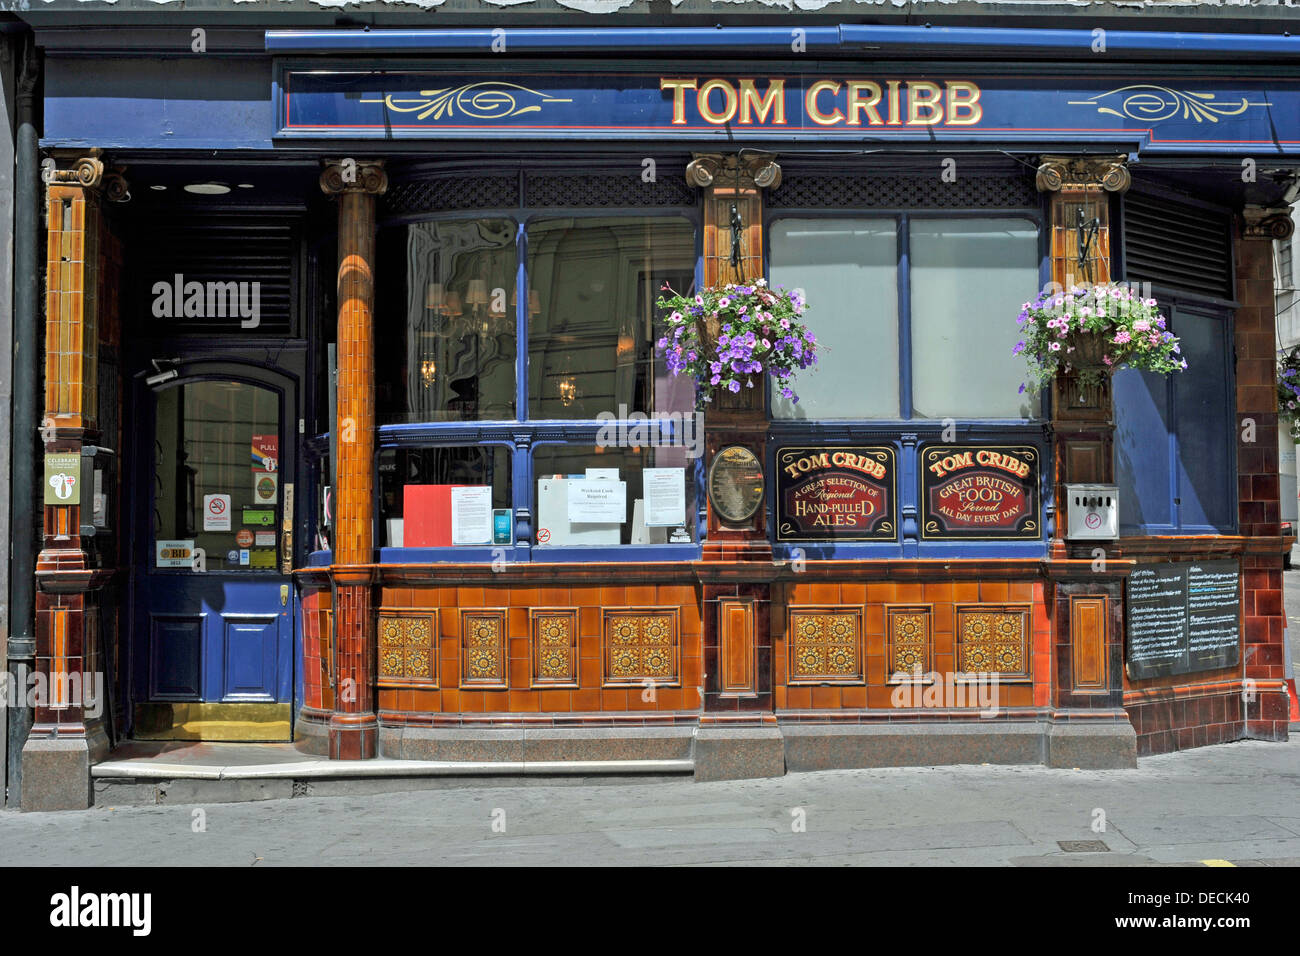 tom cribb pub Stock Photo